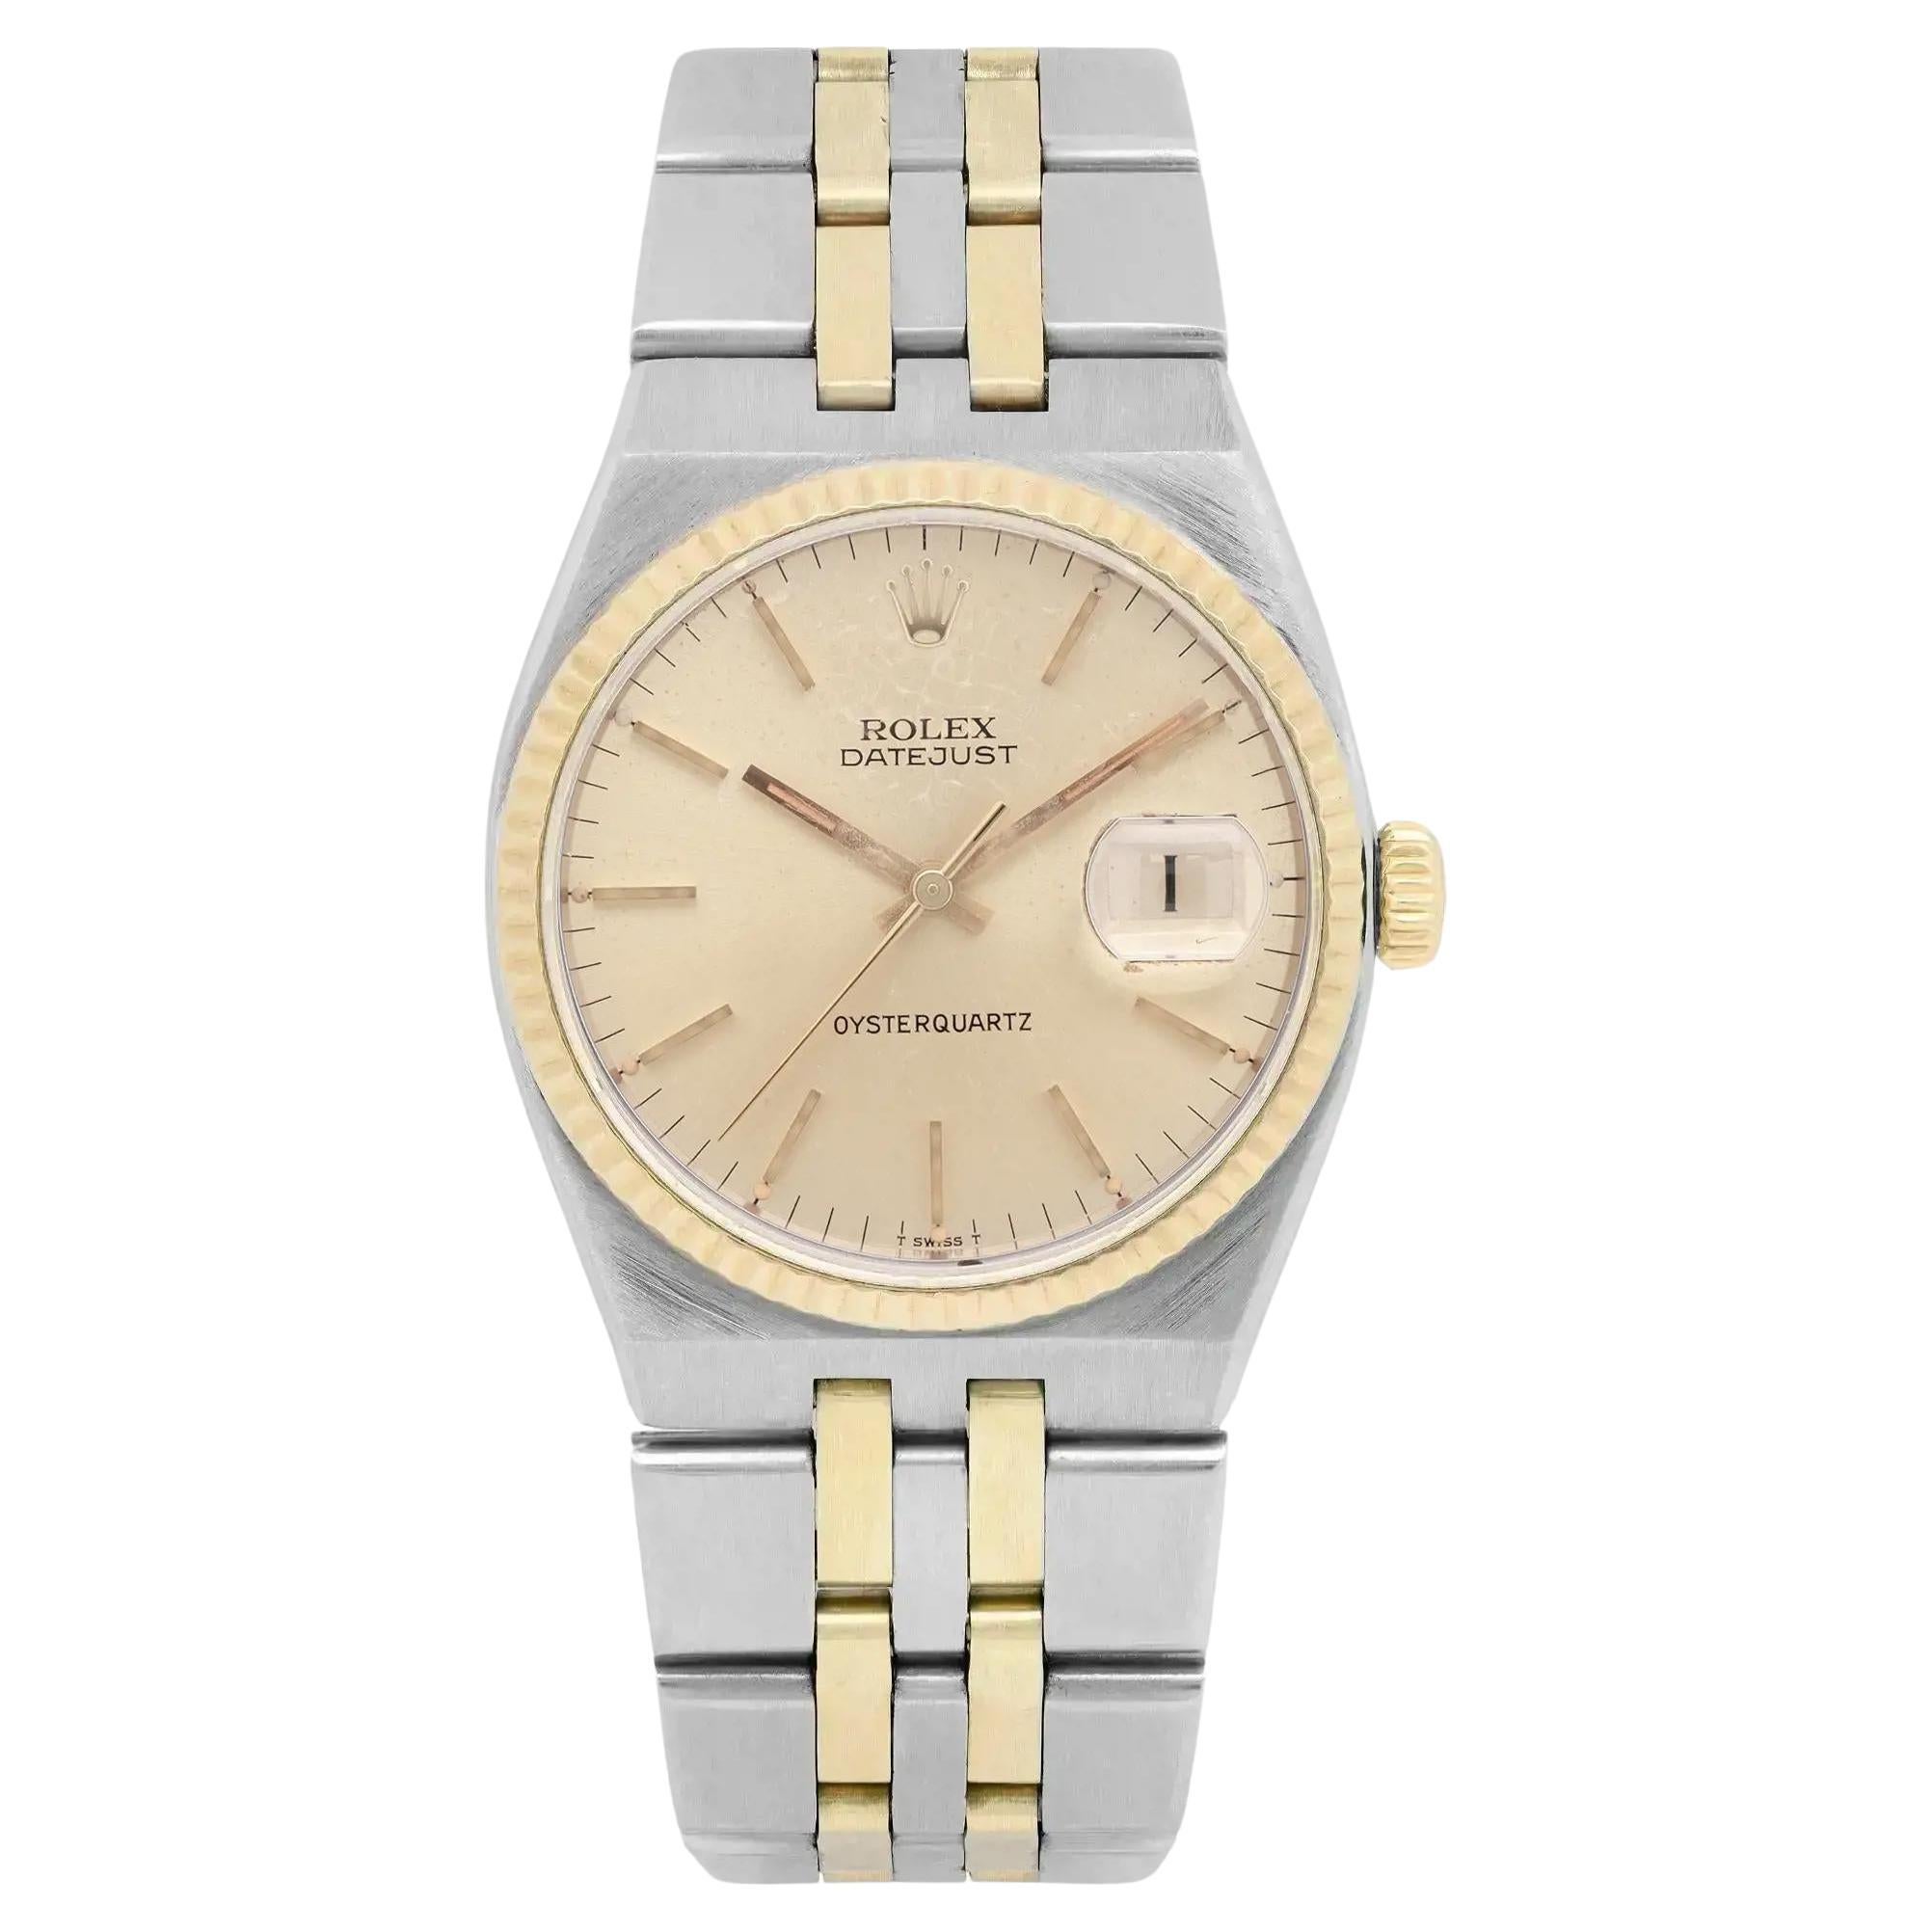 Vintage Rolex Datejust Oysterquartz 36mm 18K Gold Champagne Dial Watch 17013